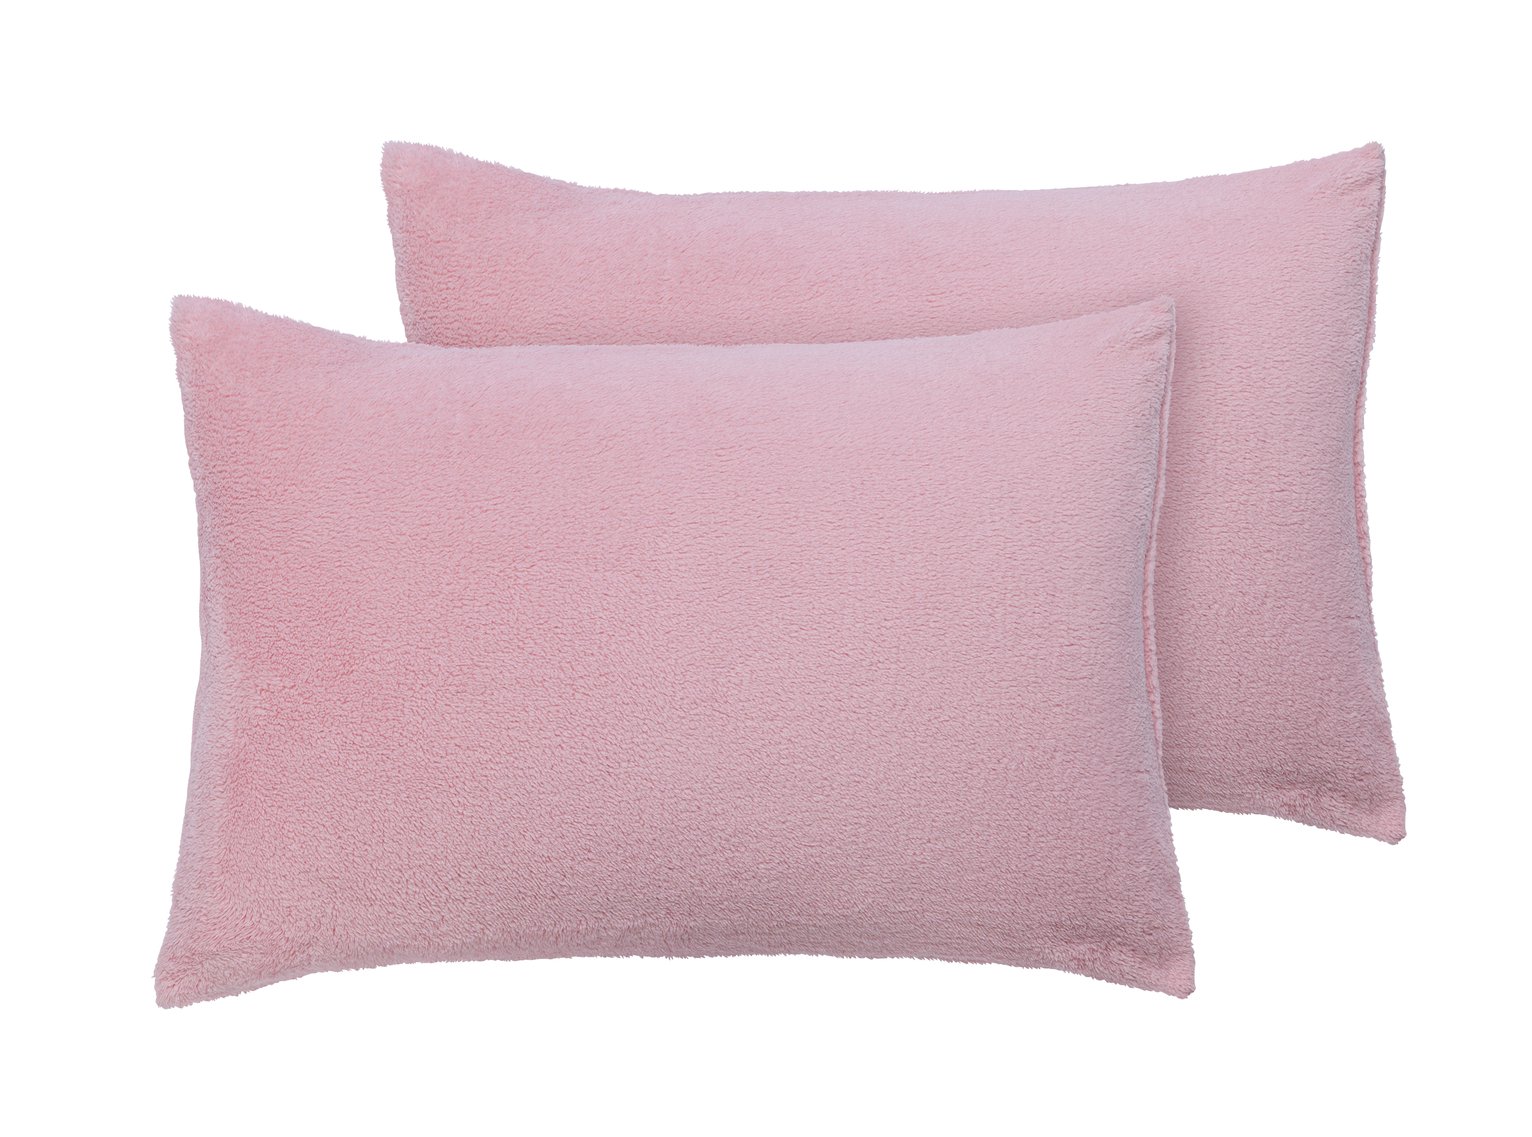 Argos Home Fleece Standard Pillowcase Pair - Blush